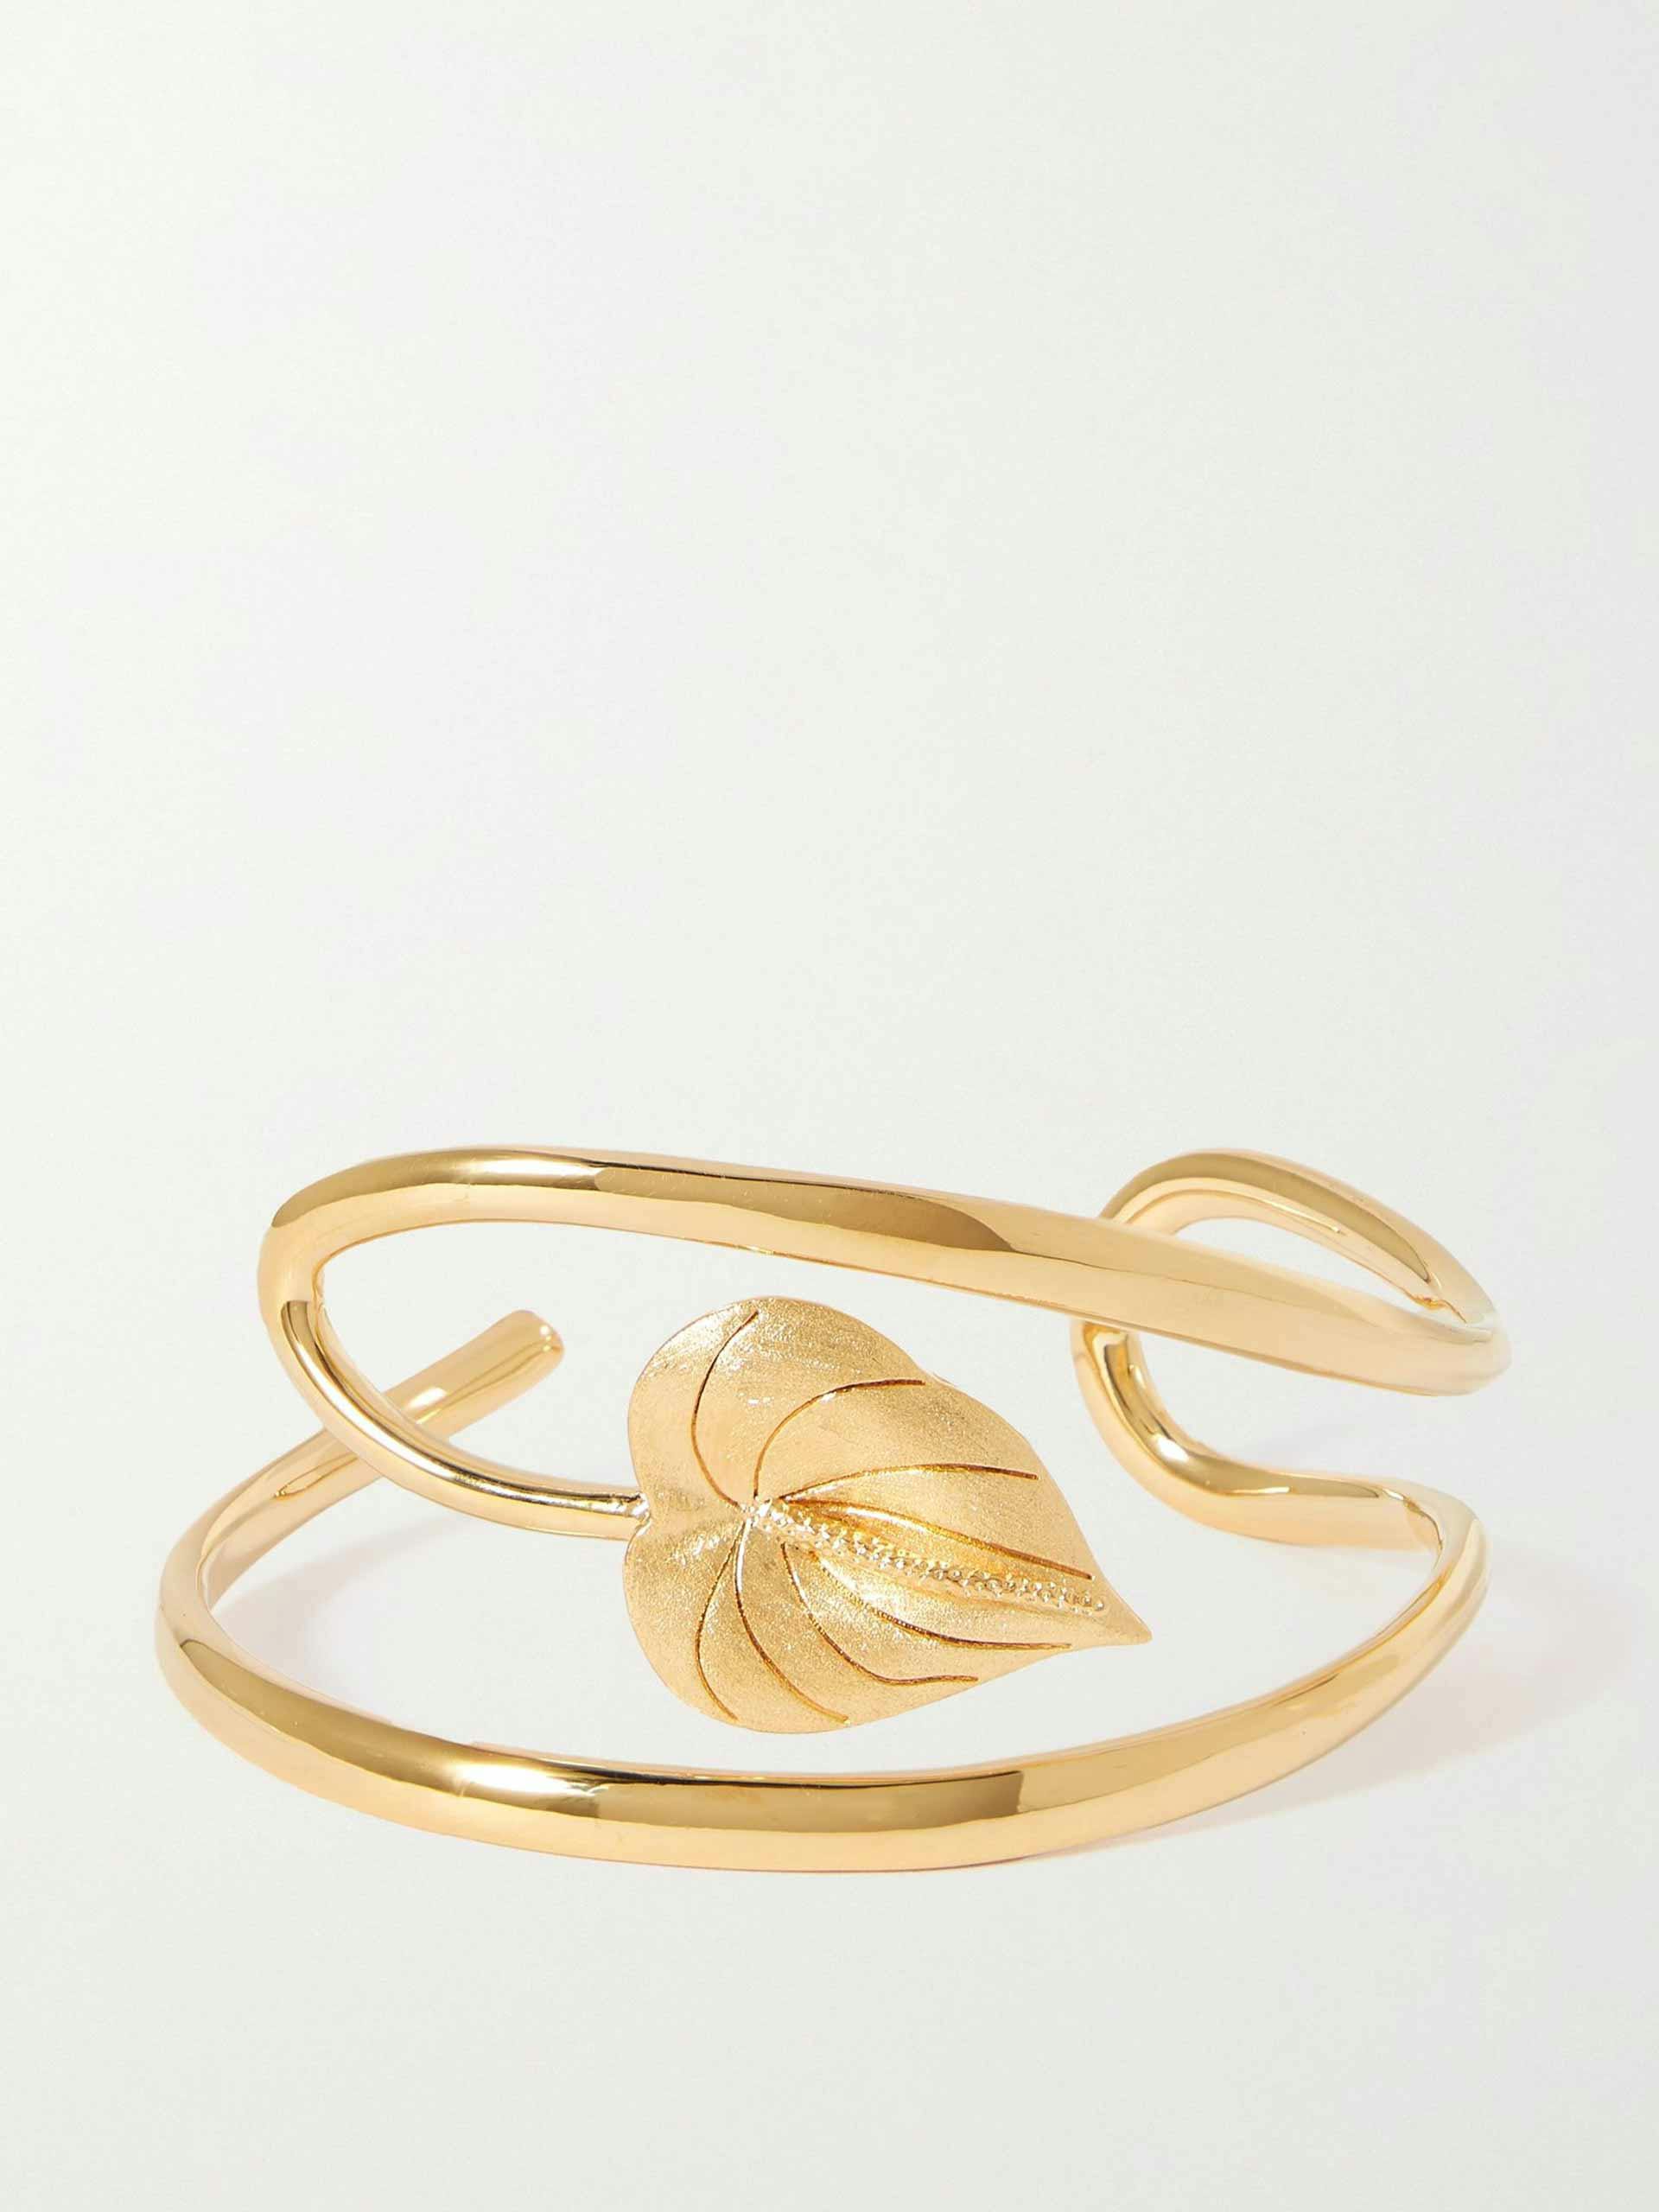 Gold-plated bangle